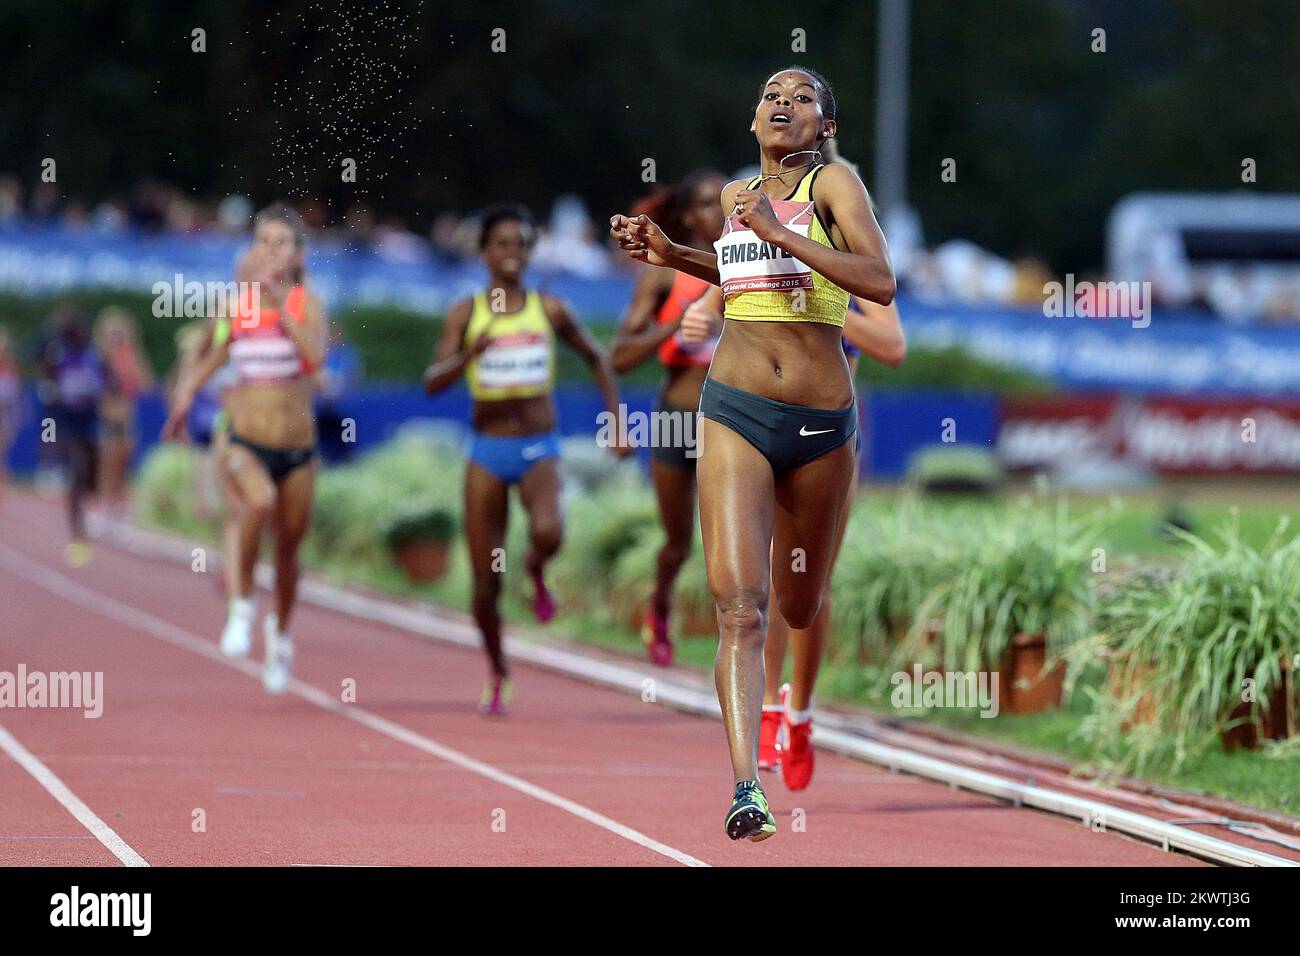 3000 m (W), Axumawit Embaye during the IAAF World Challenge at the Mladost Stadium, Zagreb, Croatia. Stock Photo